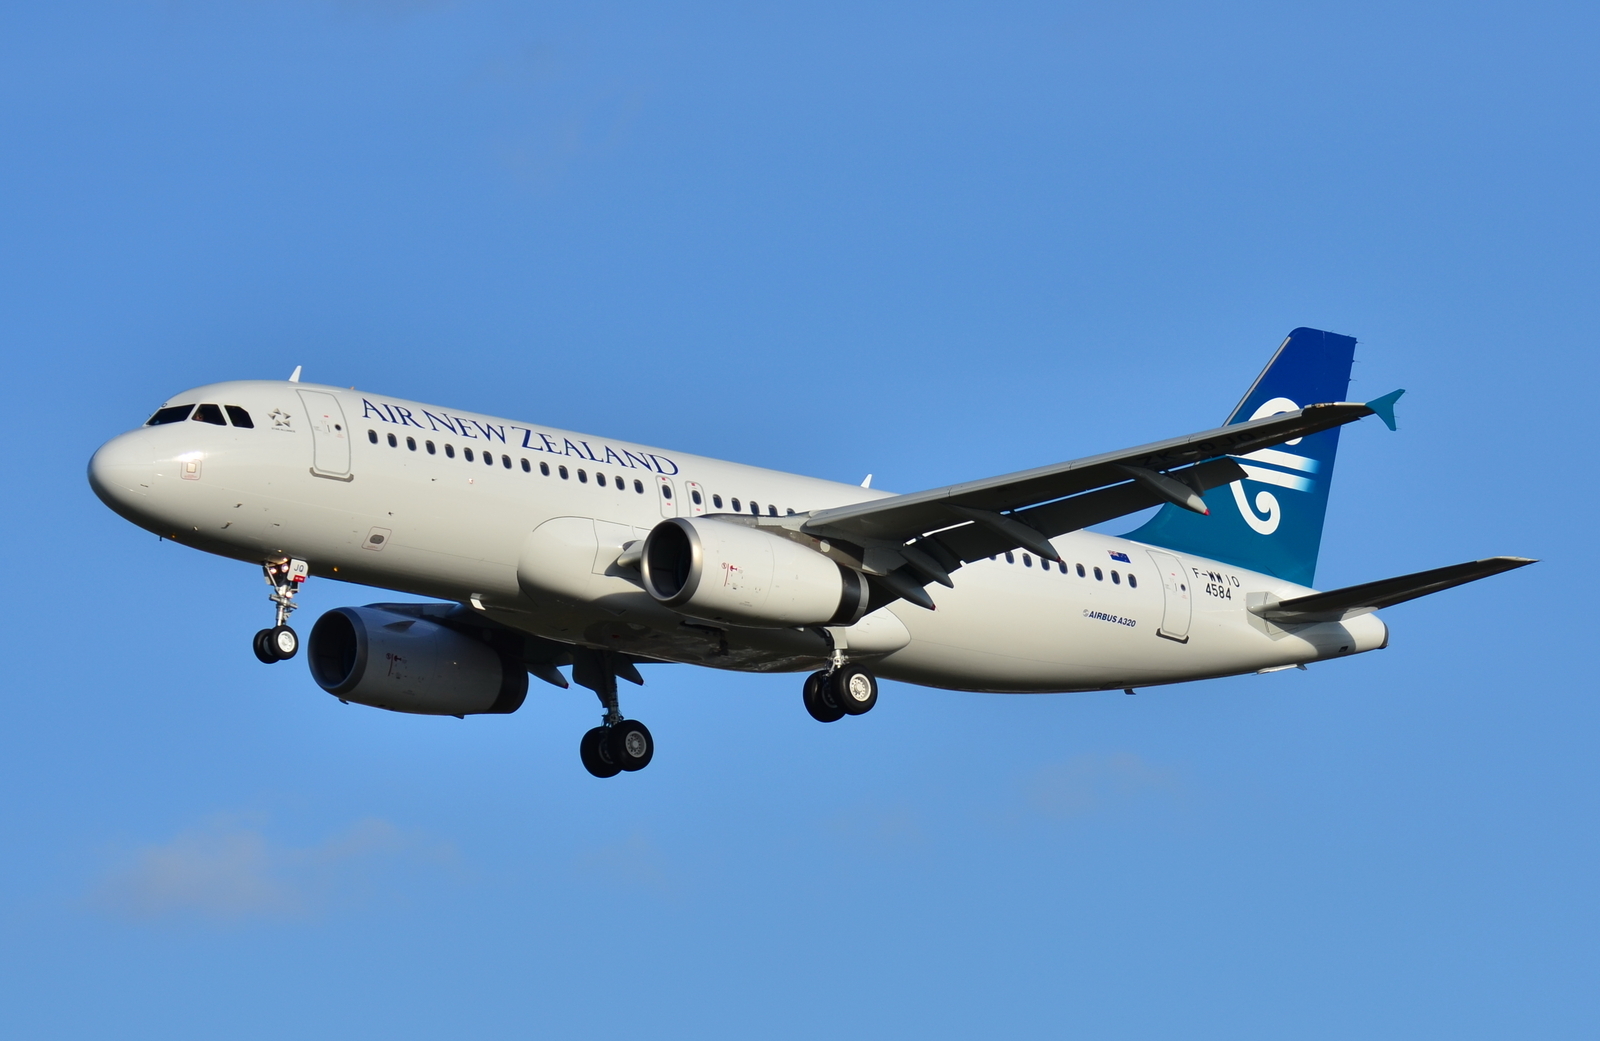 File:Airbus A320-200 Air New Zealand (ANZ) F-WWIO - MSN 4584 